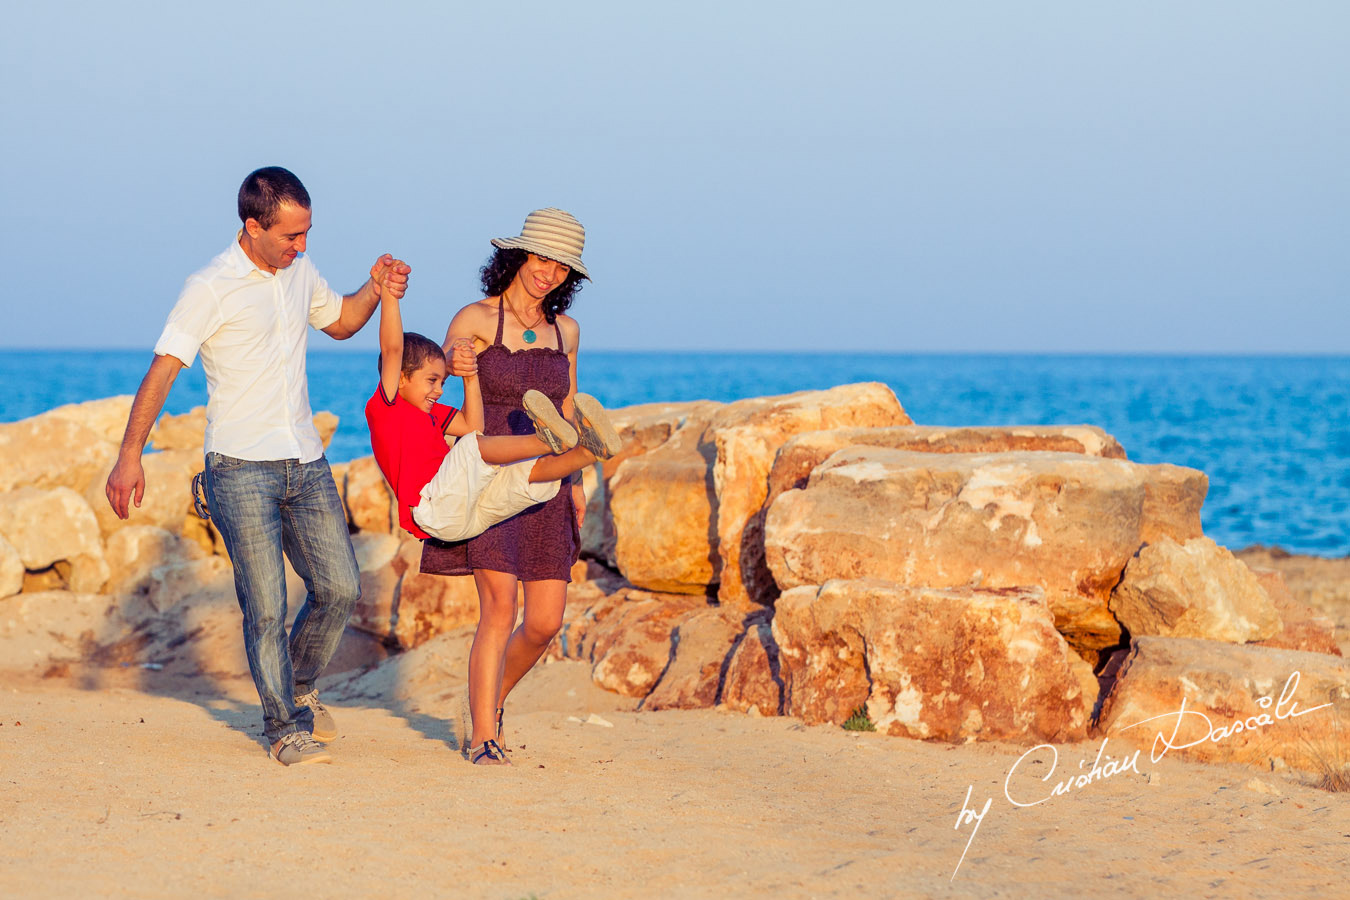 Family Beach Photo Shoot in Cyprus. Photographer: Cristian Dascalu